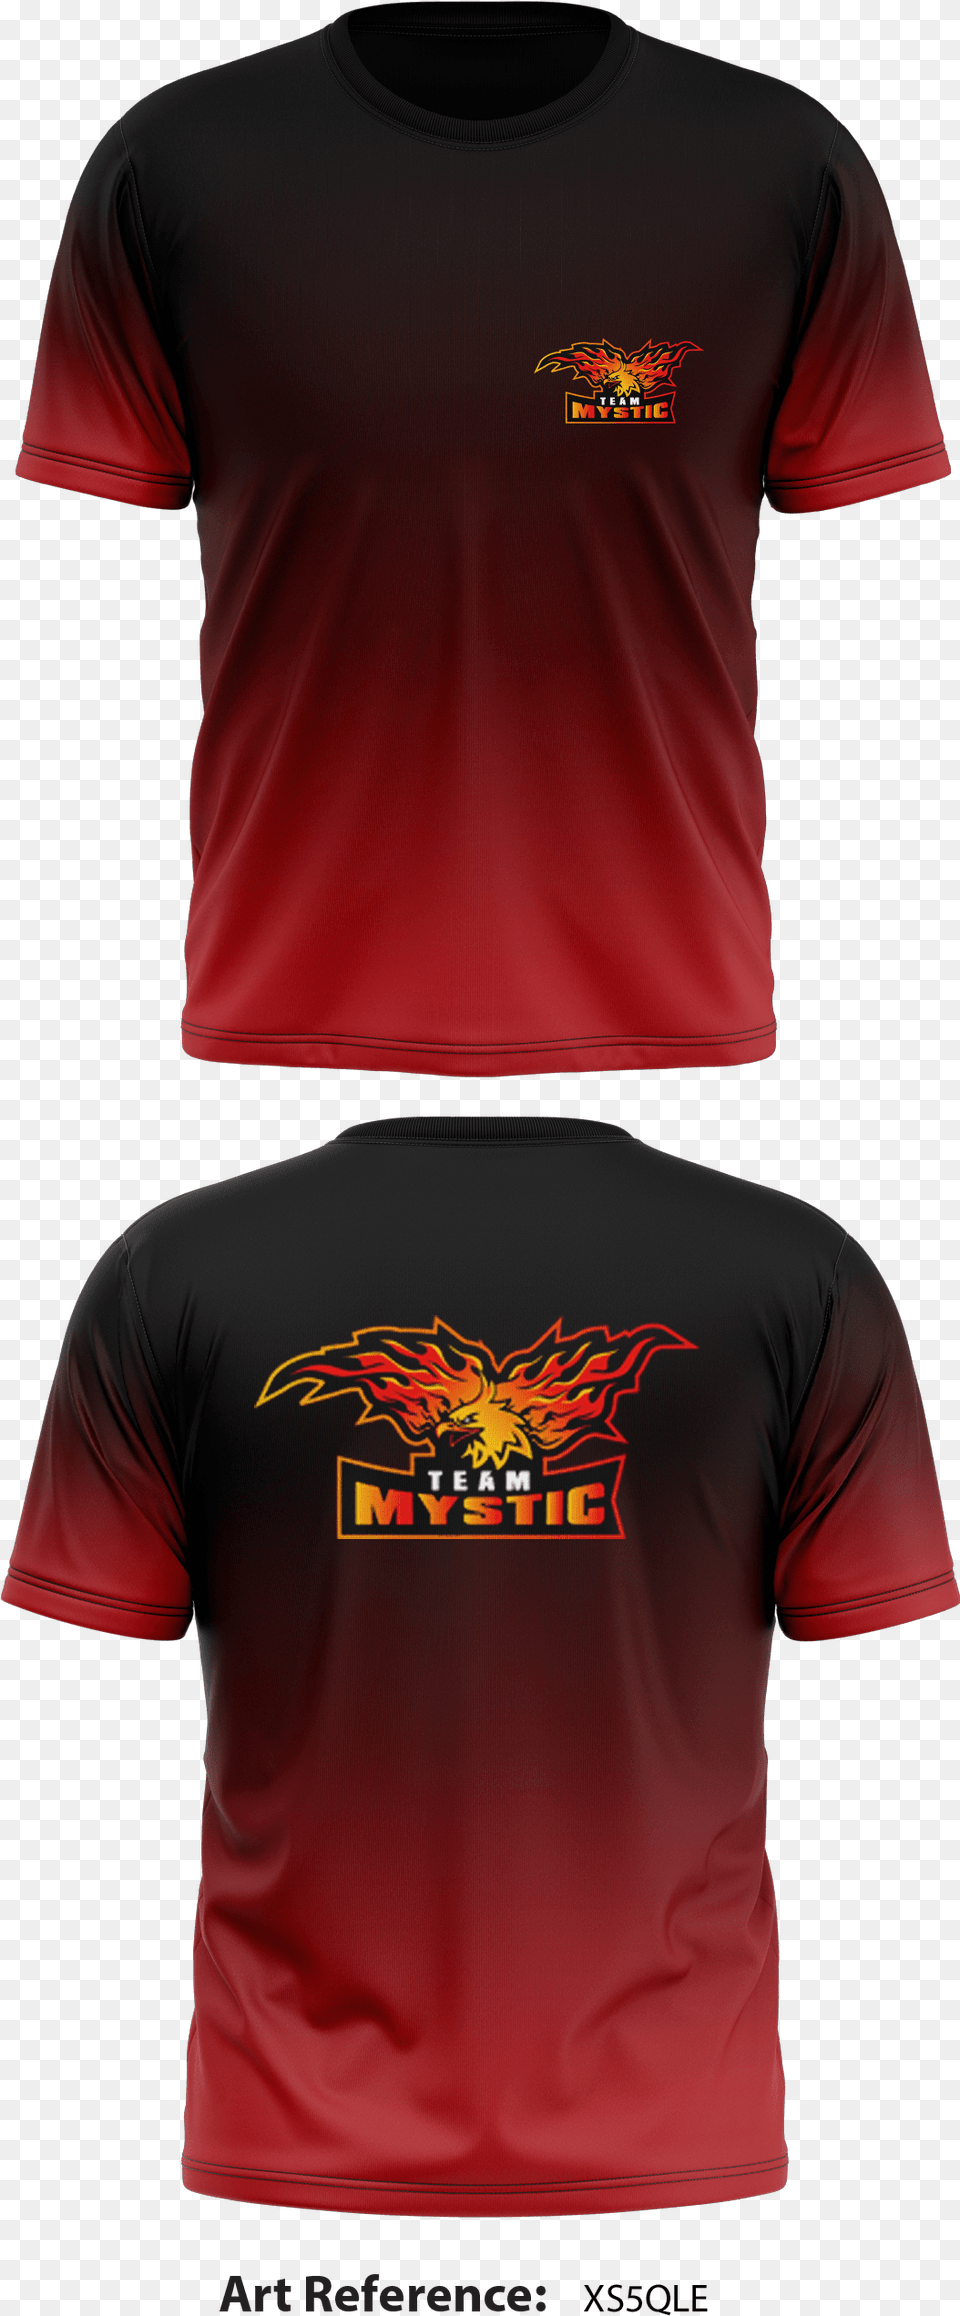 Team Mystic Men S Short Sleeve Performance Shirt Shirt, Clothing, T-shirt, Adult, Male Png